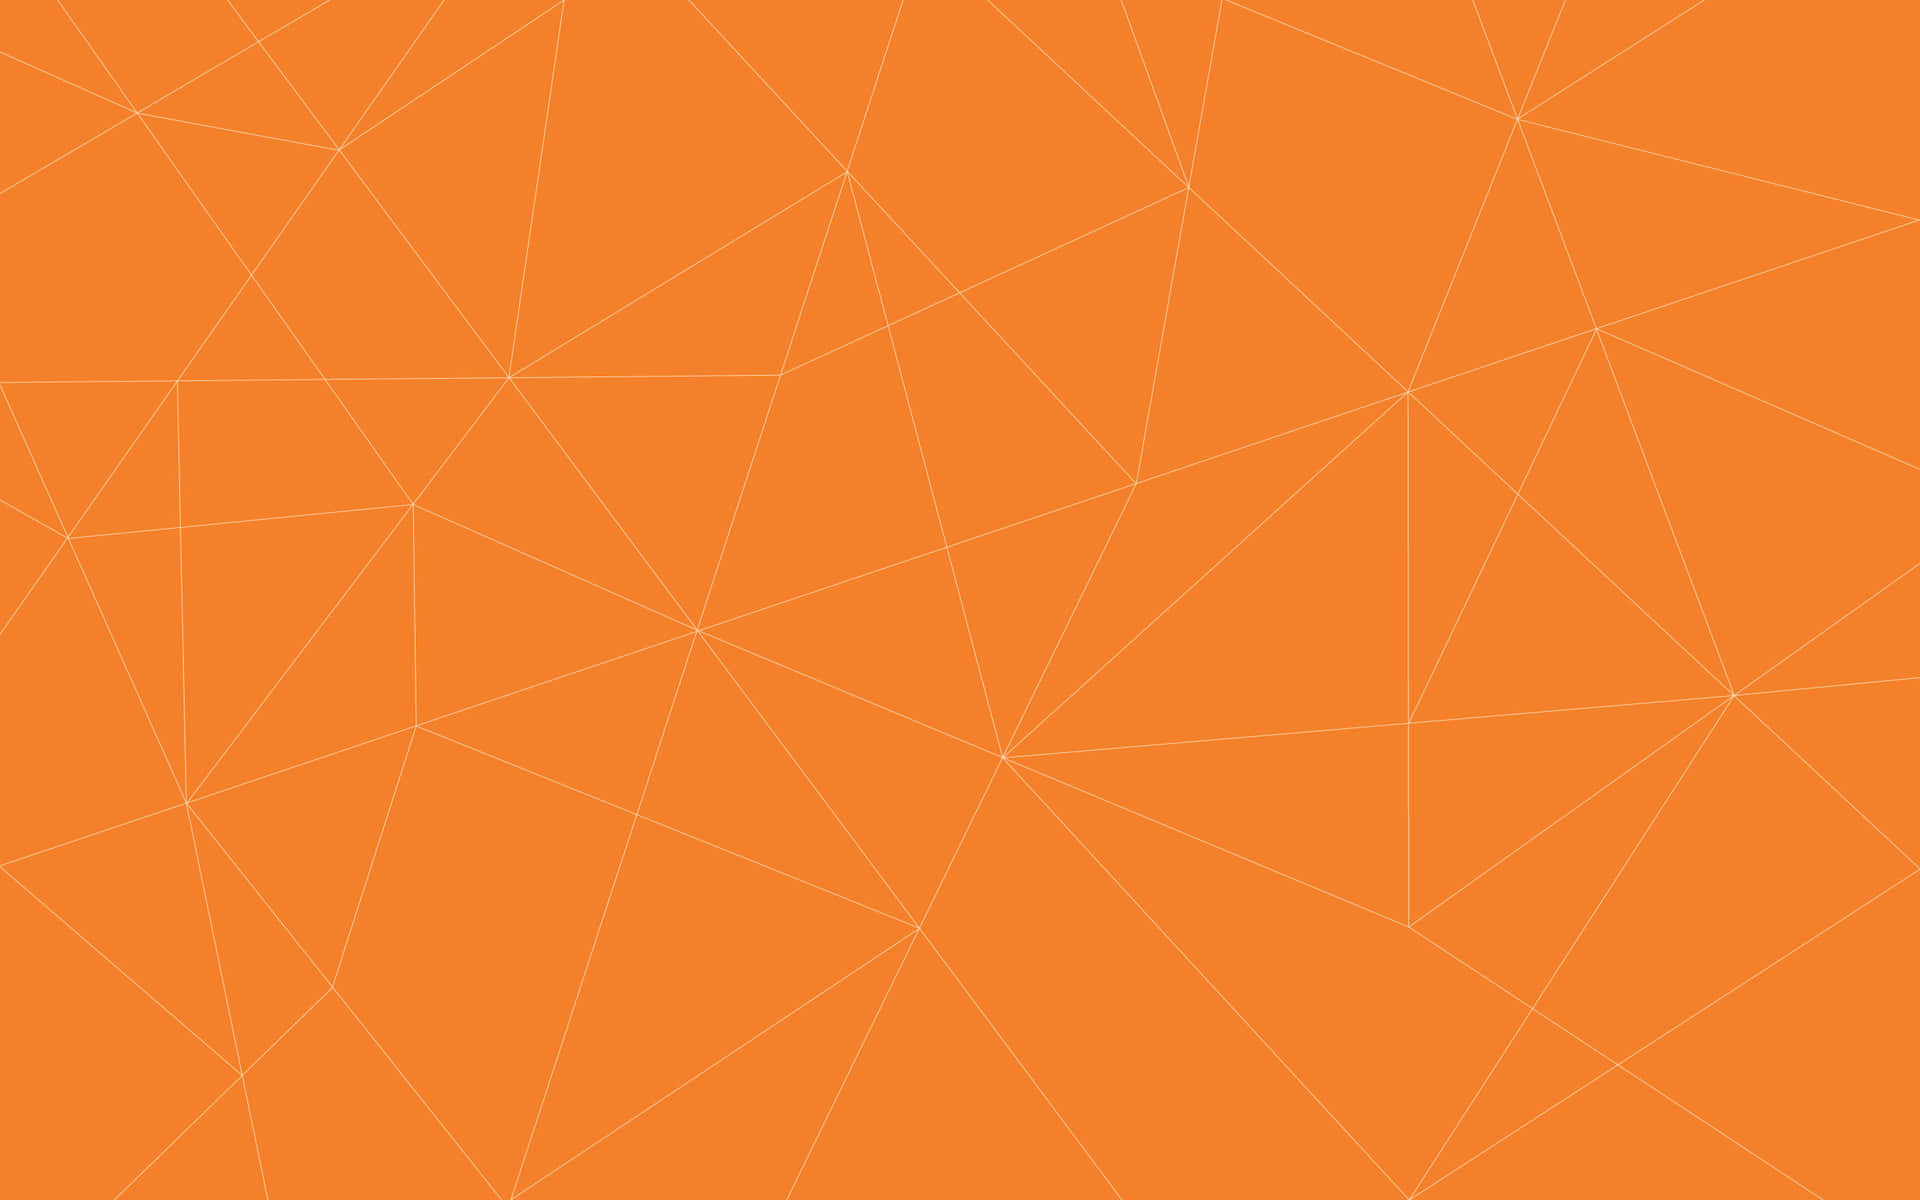 Brighten up your workspace with a vibrant orange desktop. Wallpaper